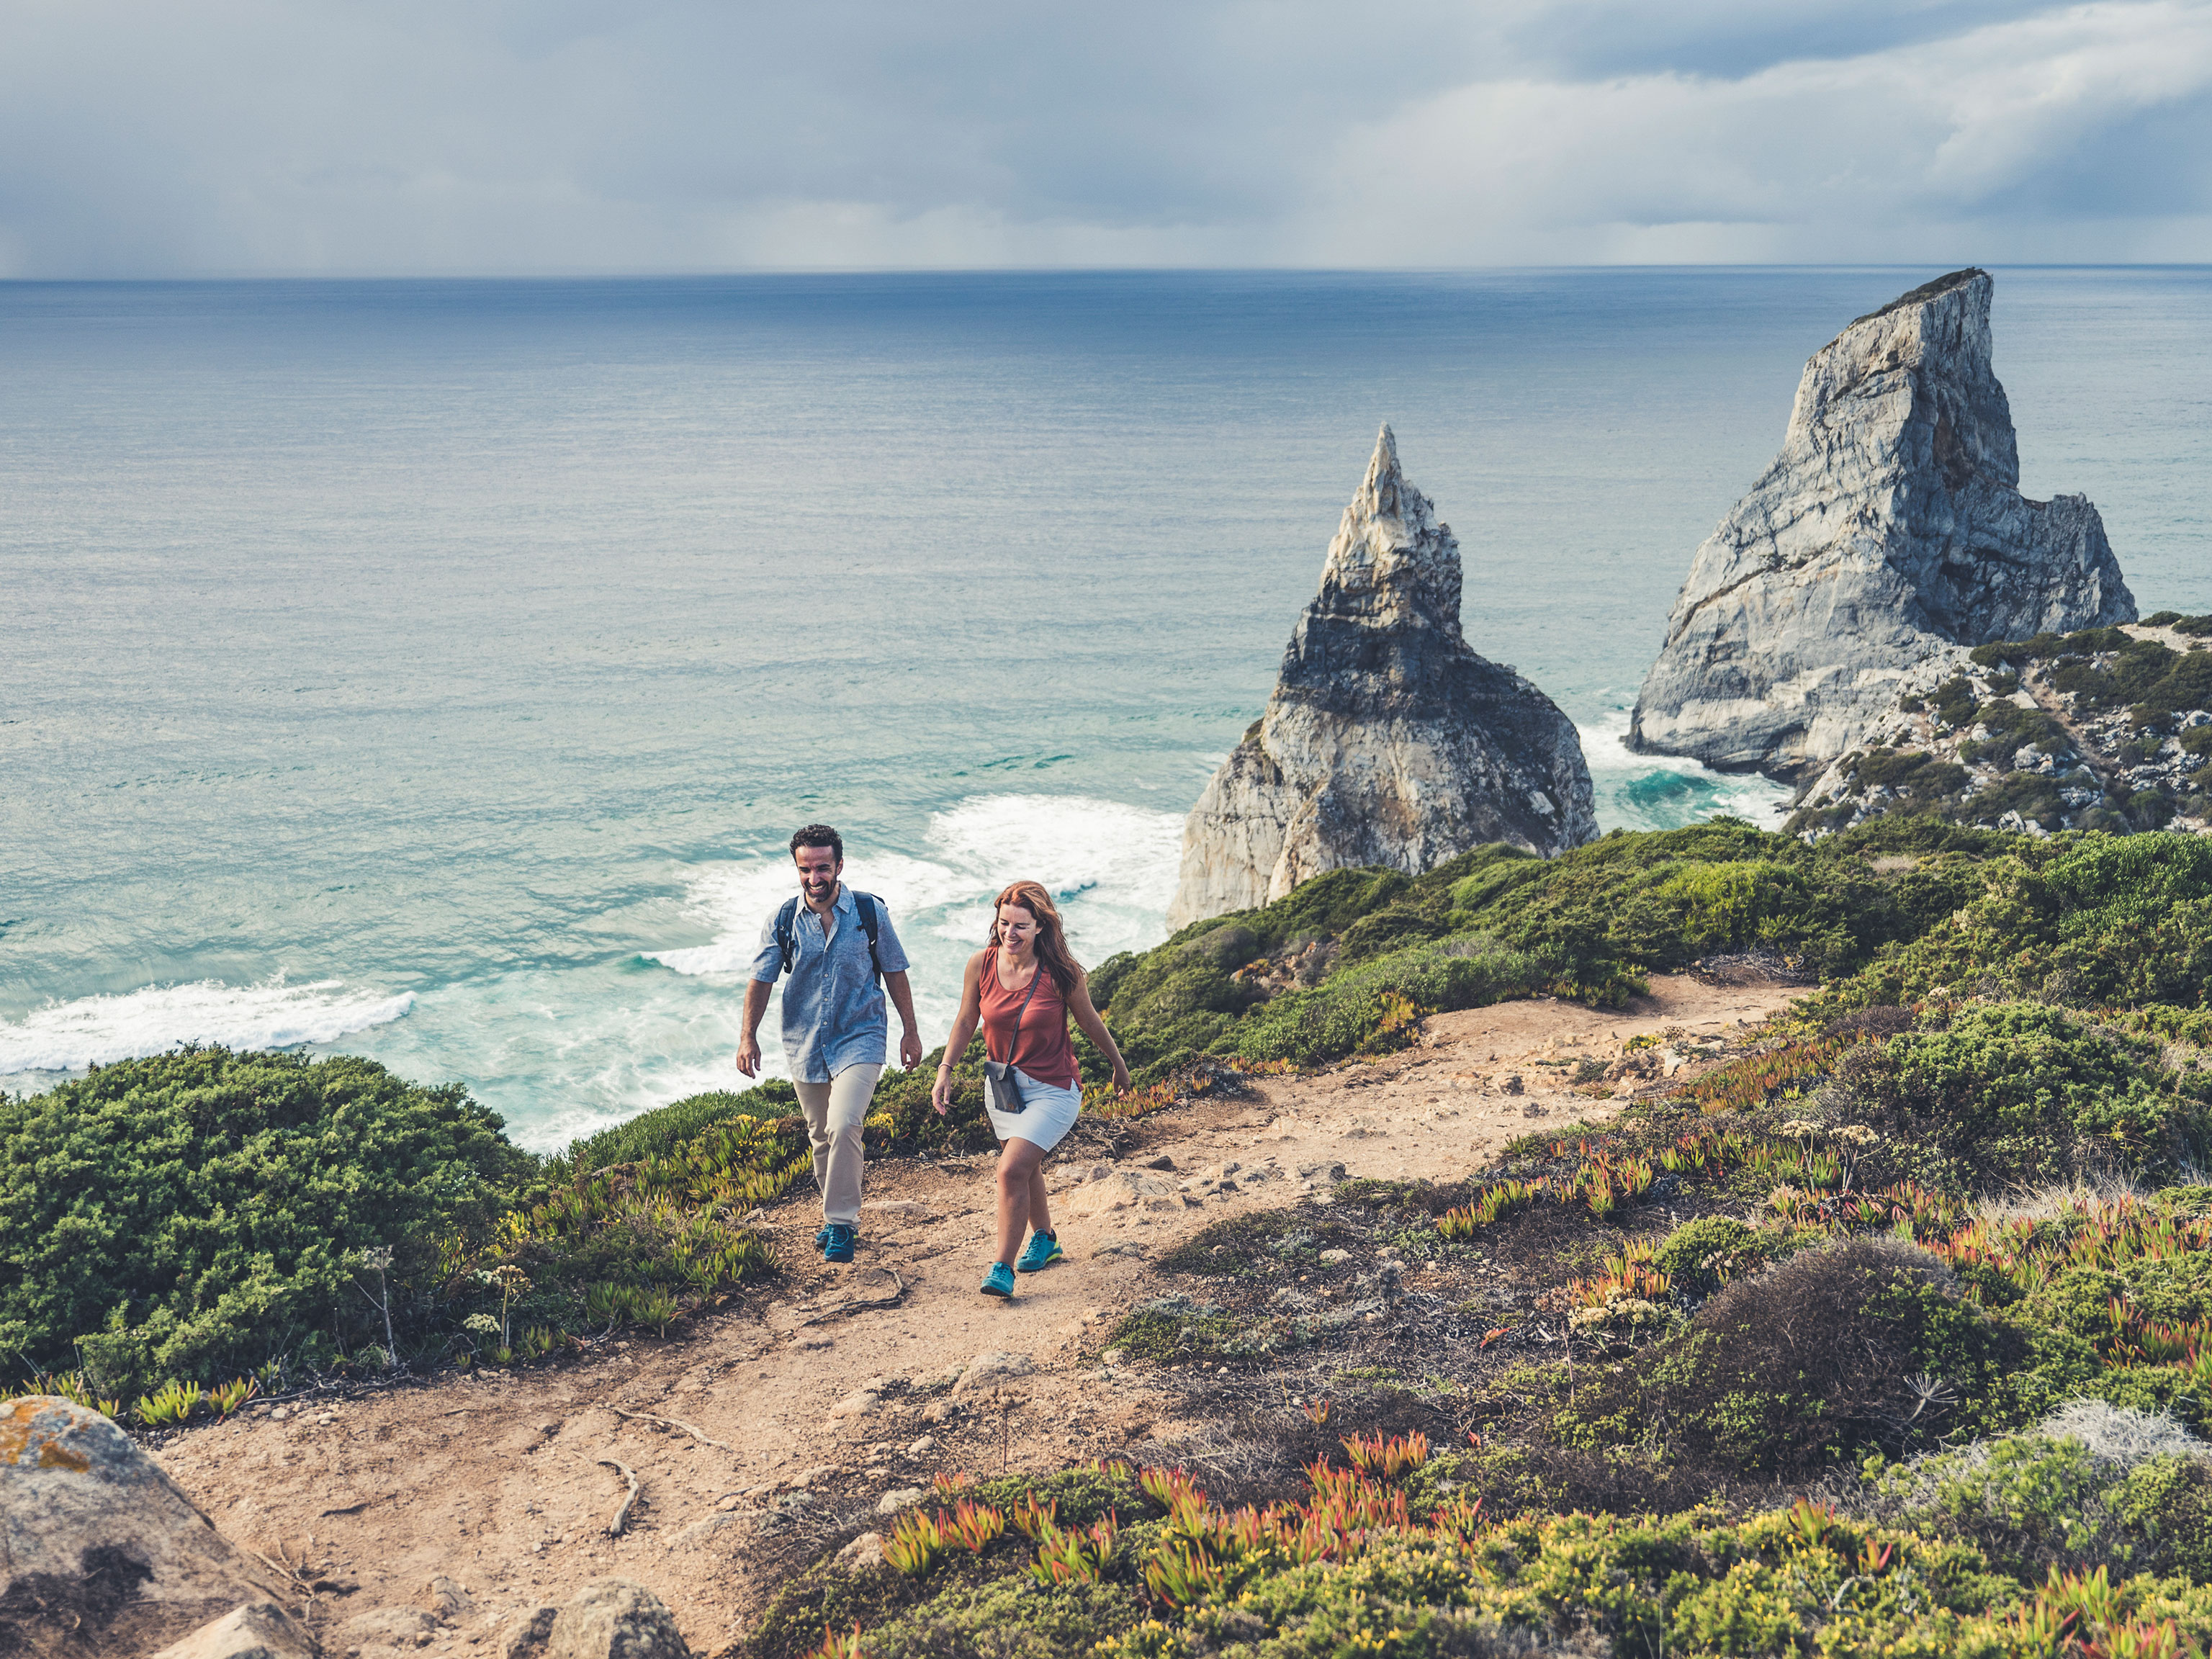 Sintra hiking trail on a coastal footpath along Praia da Ursa with steep rock columns jutting out from the surf